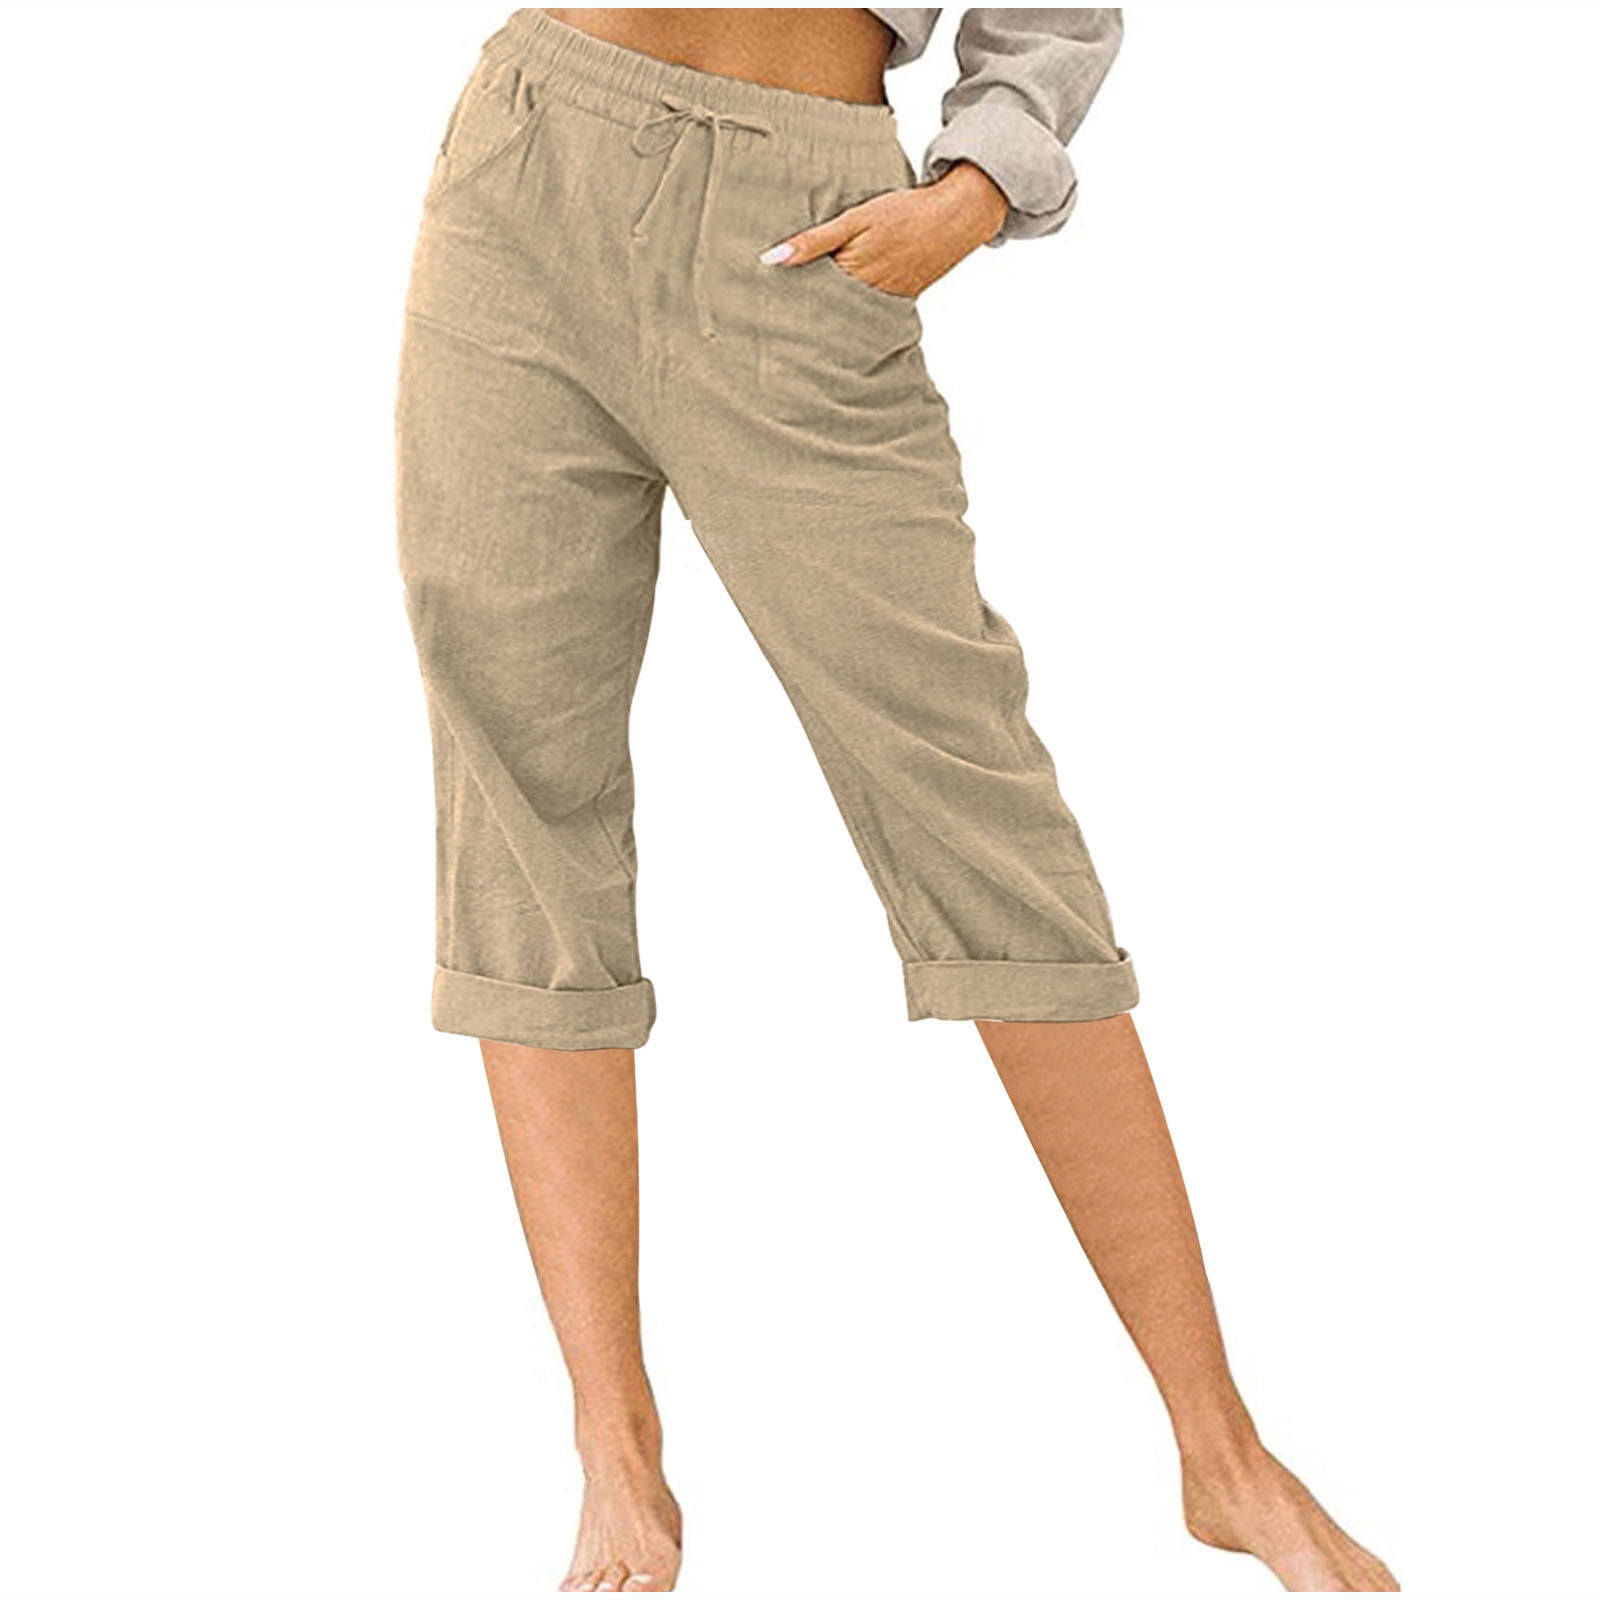 pbnbp Linen Pants Women Summer Casual Clearance Petite Dress Slacks ...